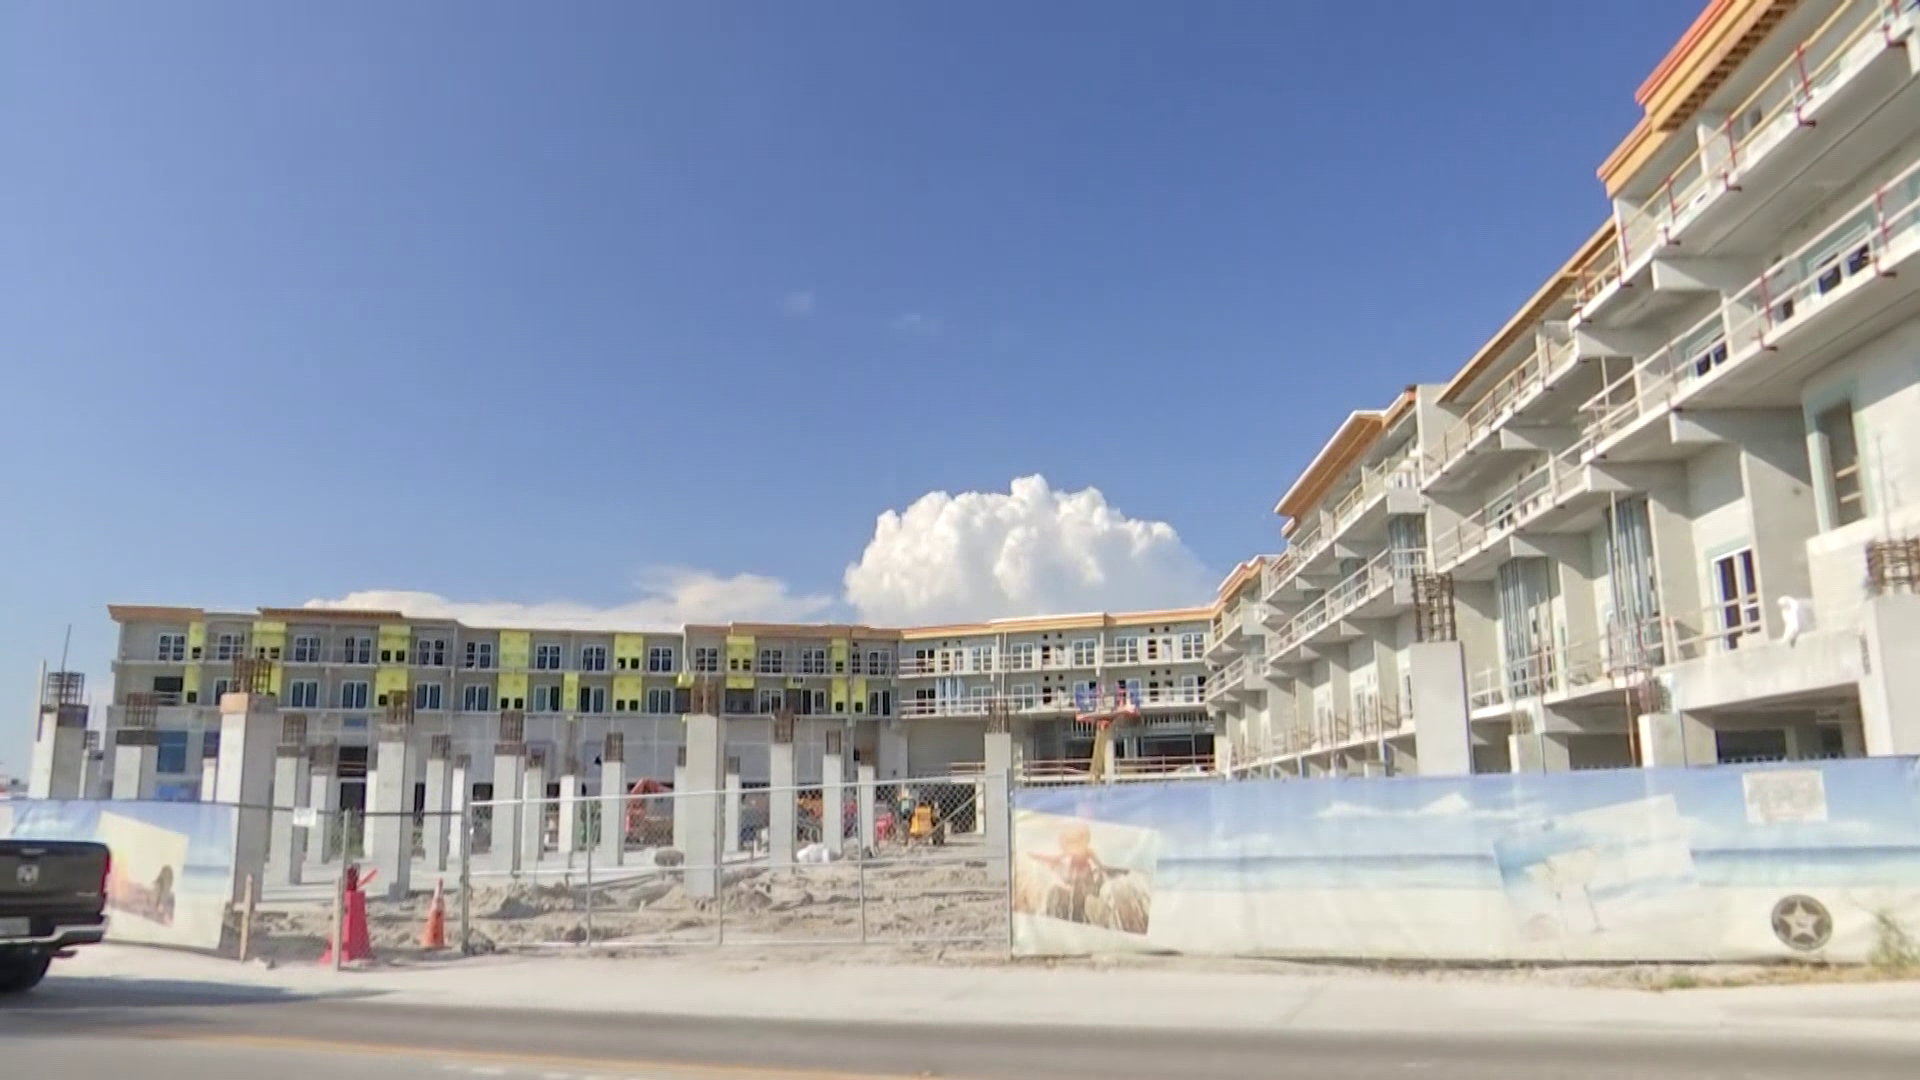 Margaritaville Resort construction prepares for Hurricane Ian - Wink News